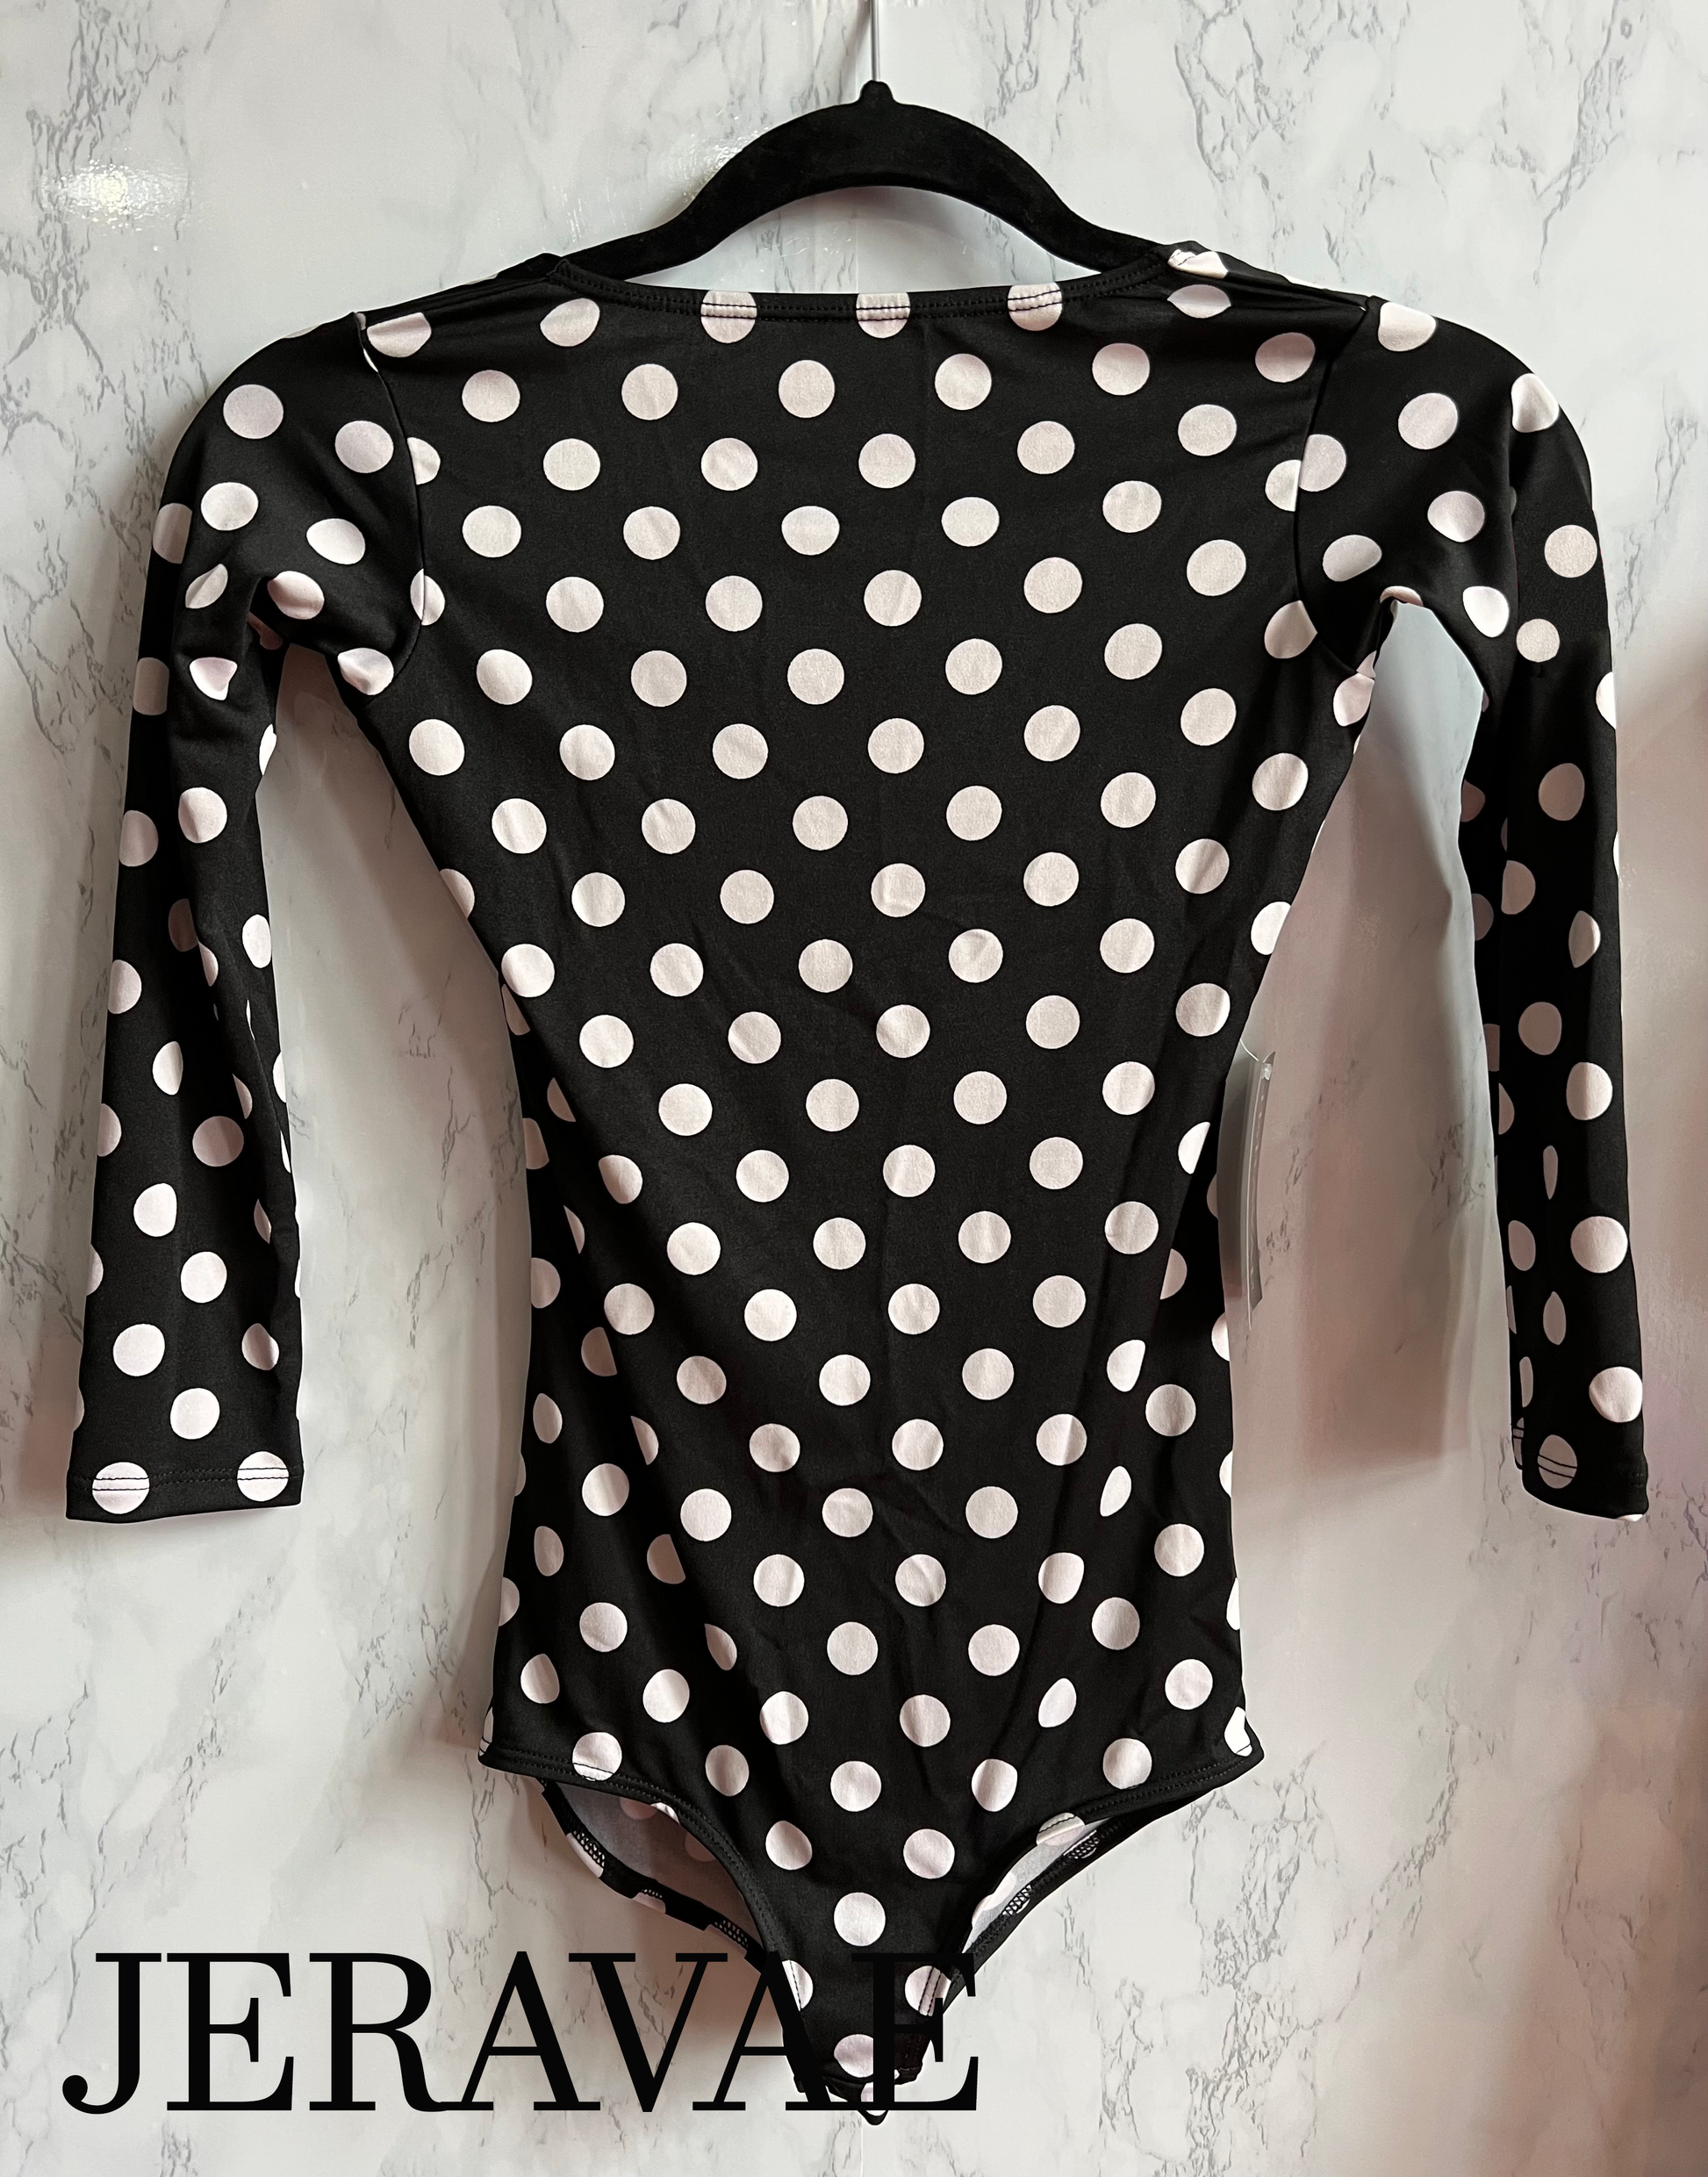 black bodysuit with white polka dots